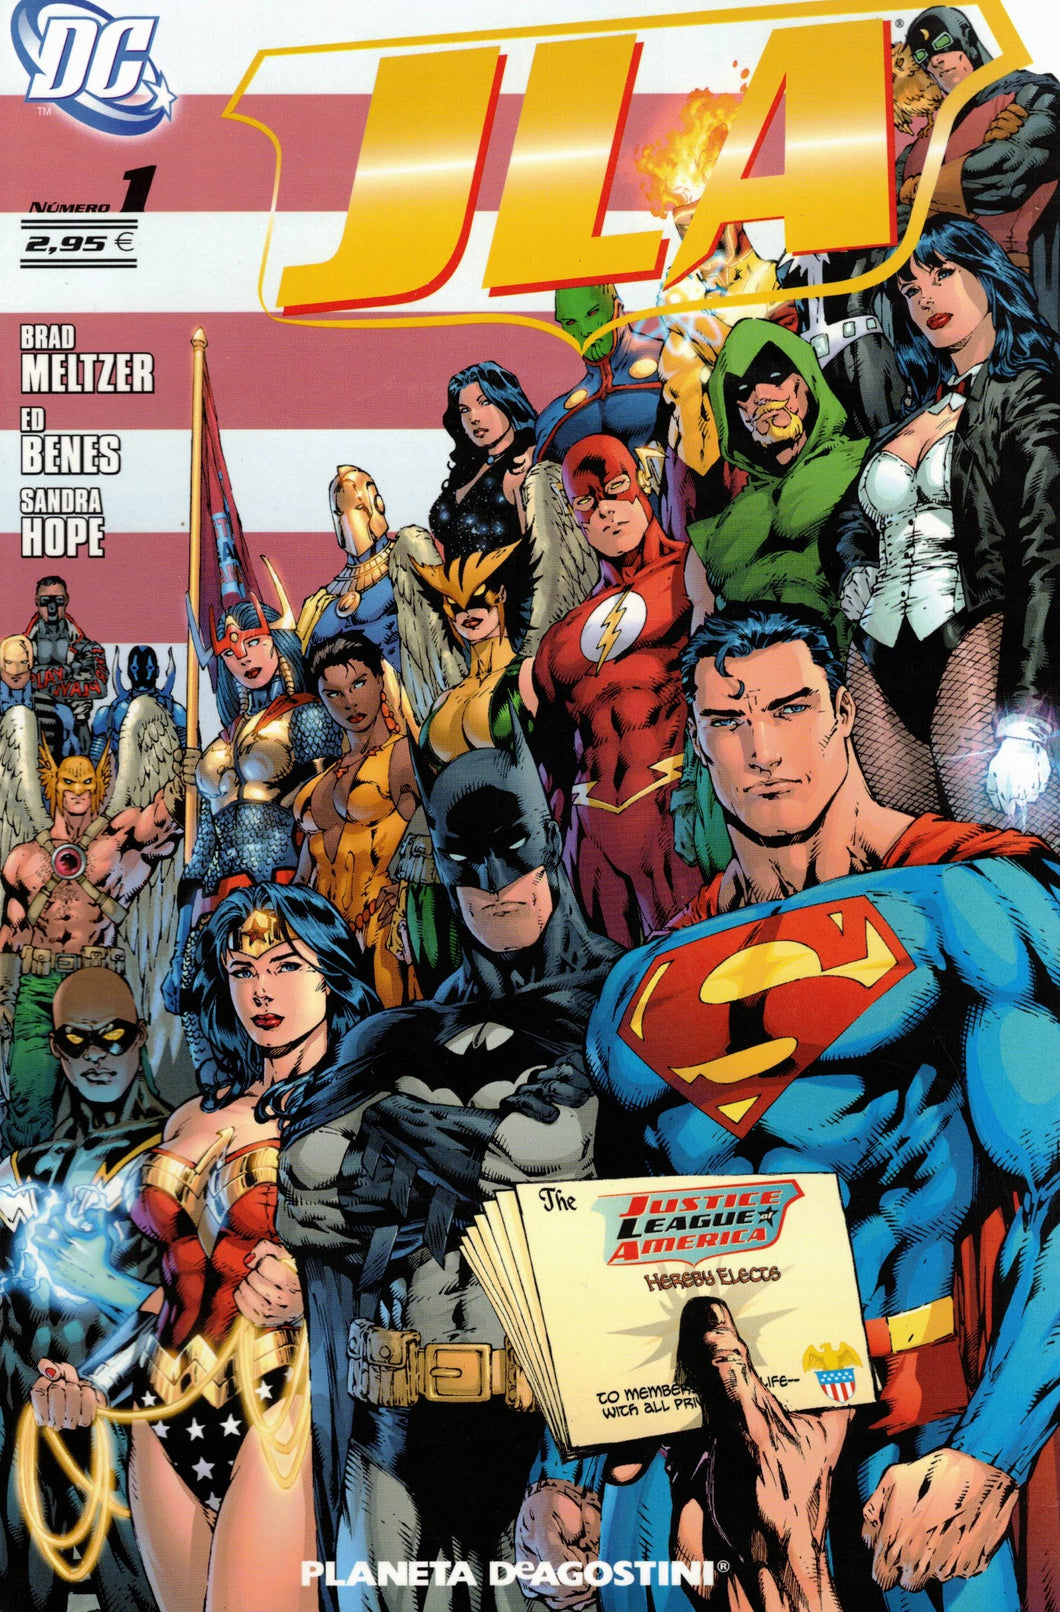 JLA (DC) Nº1 (C-198) Justice League of America - BRAD MELTZER, ED BENES, SANDRA HOPE (COMIC)(very good second hand)